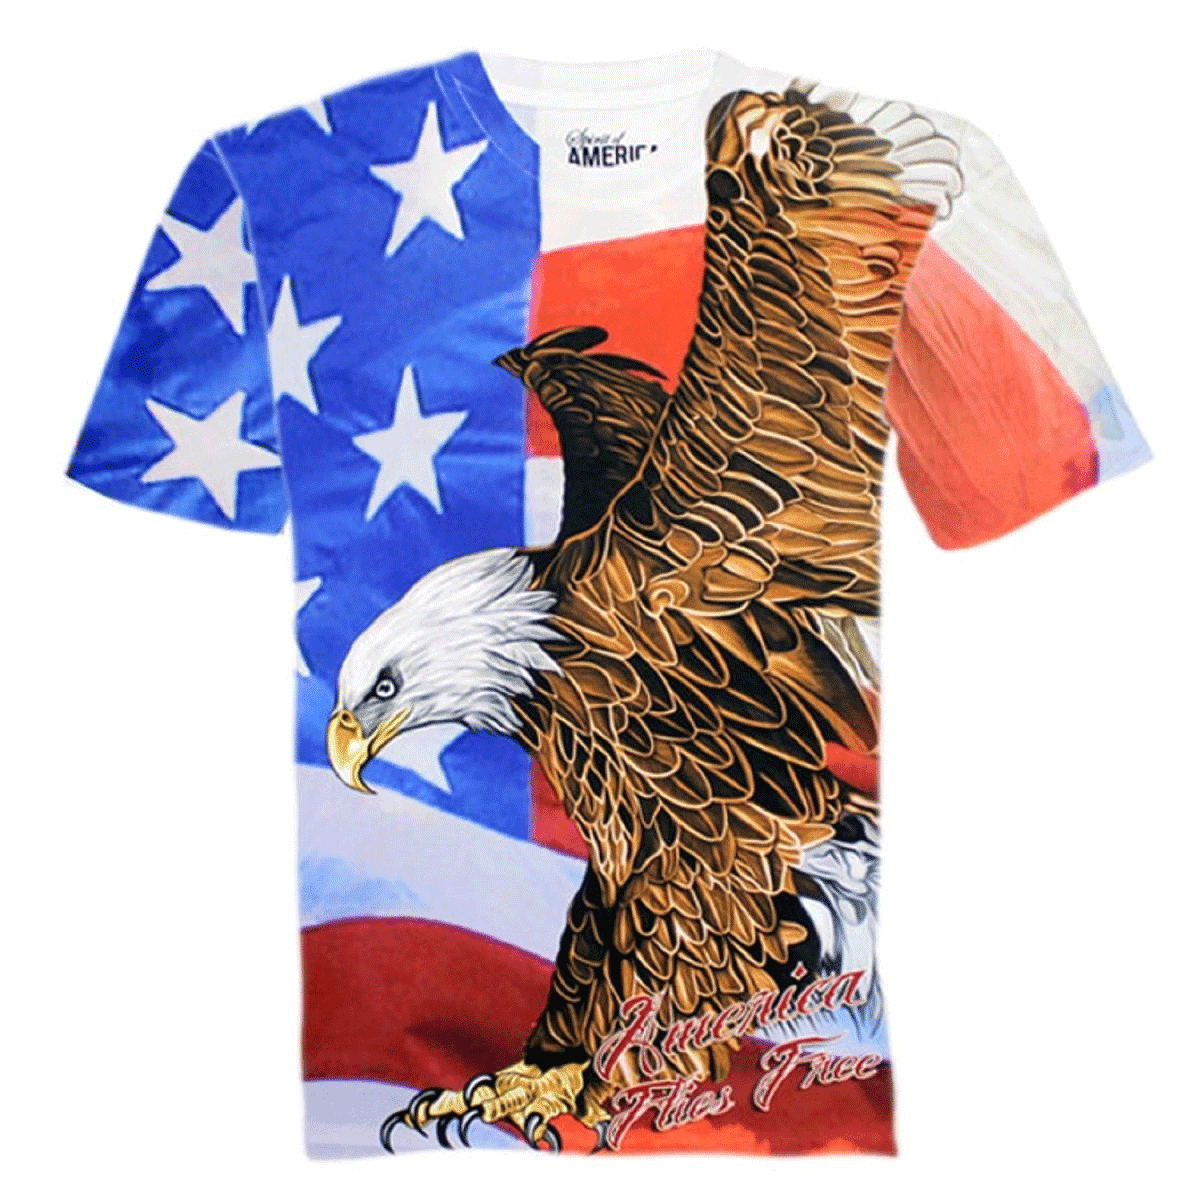 Bald Eagle American flag21 Mens Tee Shirt Gift Mesh Cotton Short Sleeve